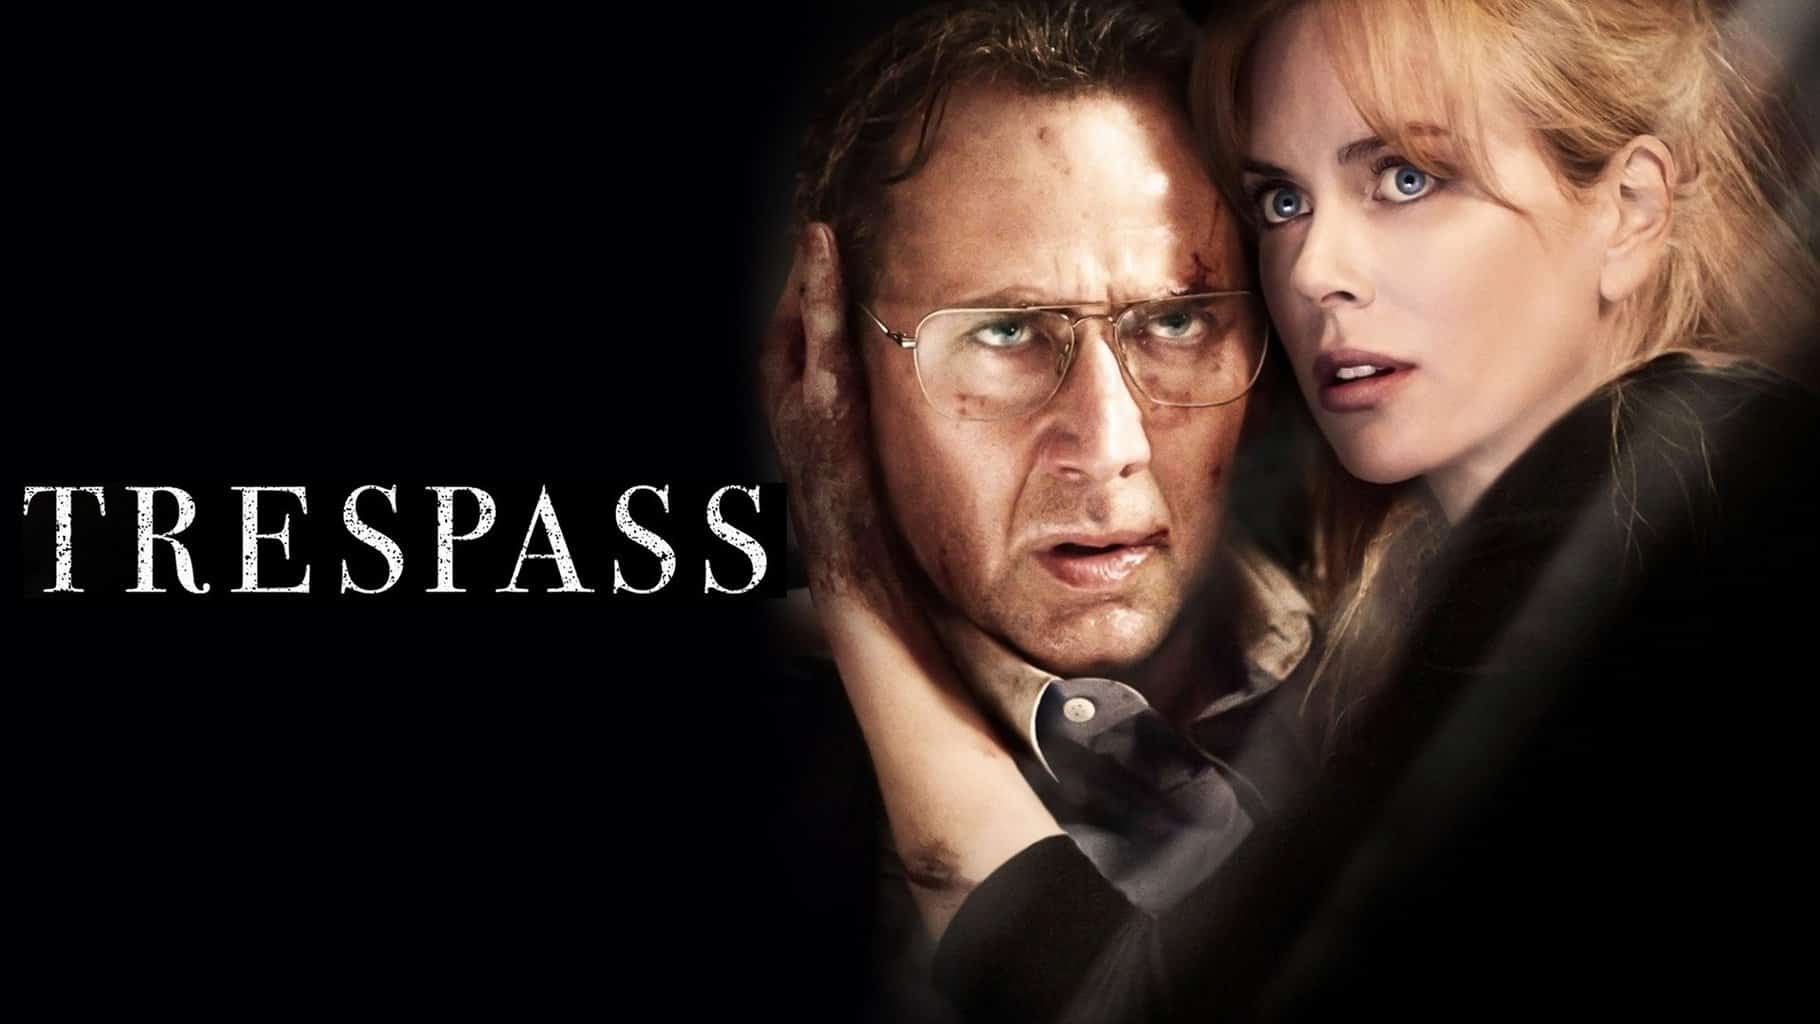 Trespass: A Gripping Thriller Starring Nicolas Cage and Nicole Kidman